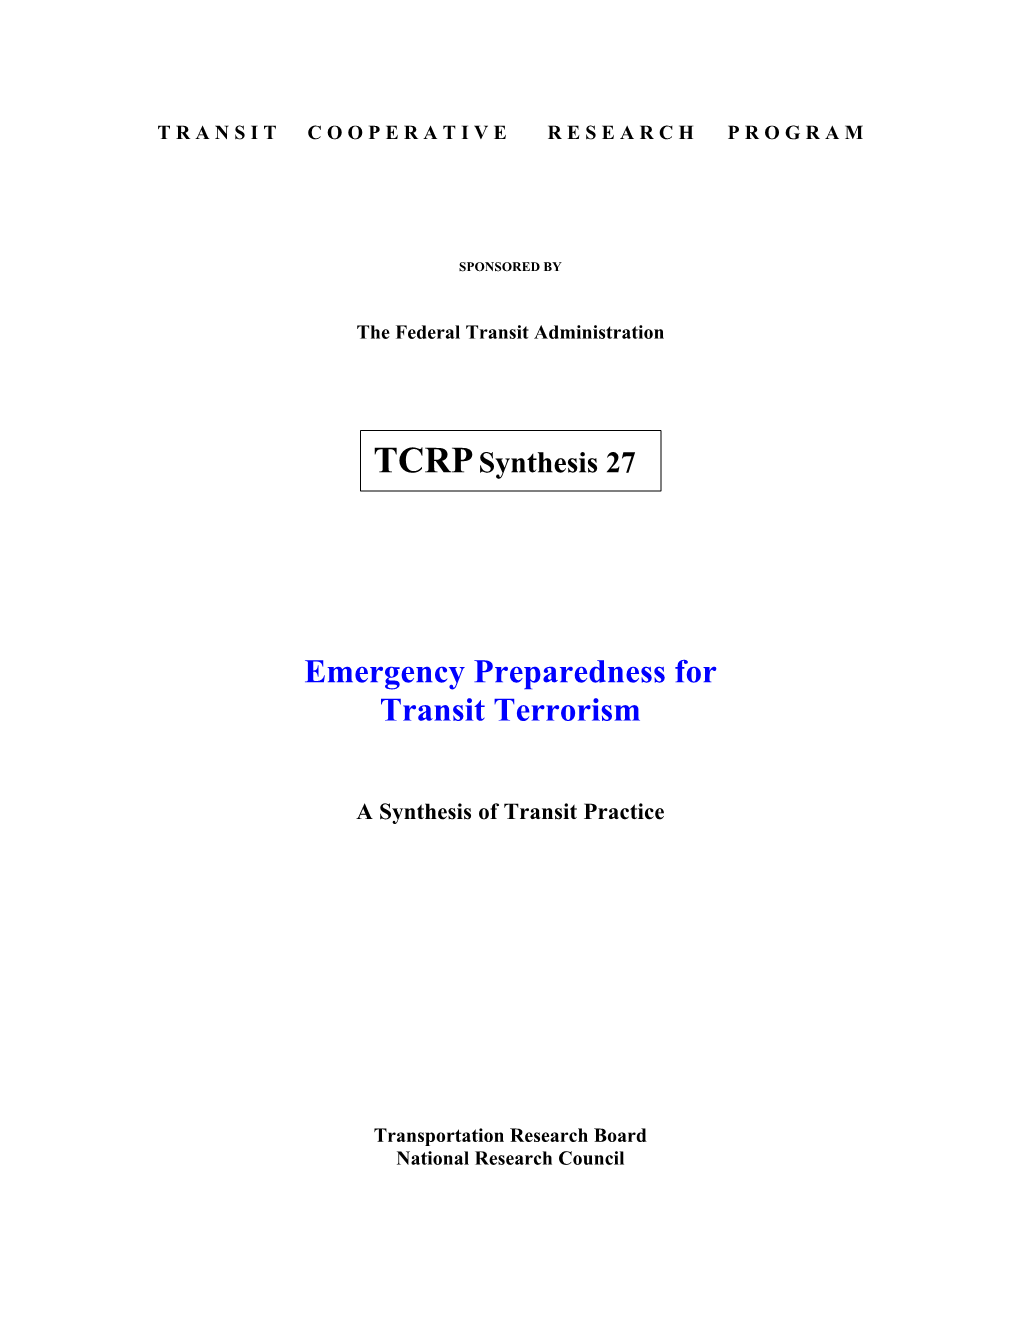 Emergency Preparedness for Transit Terrorism